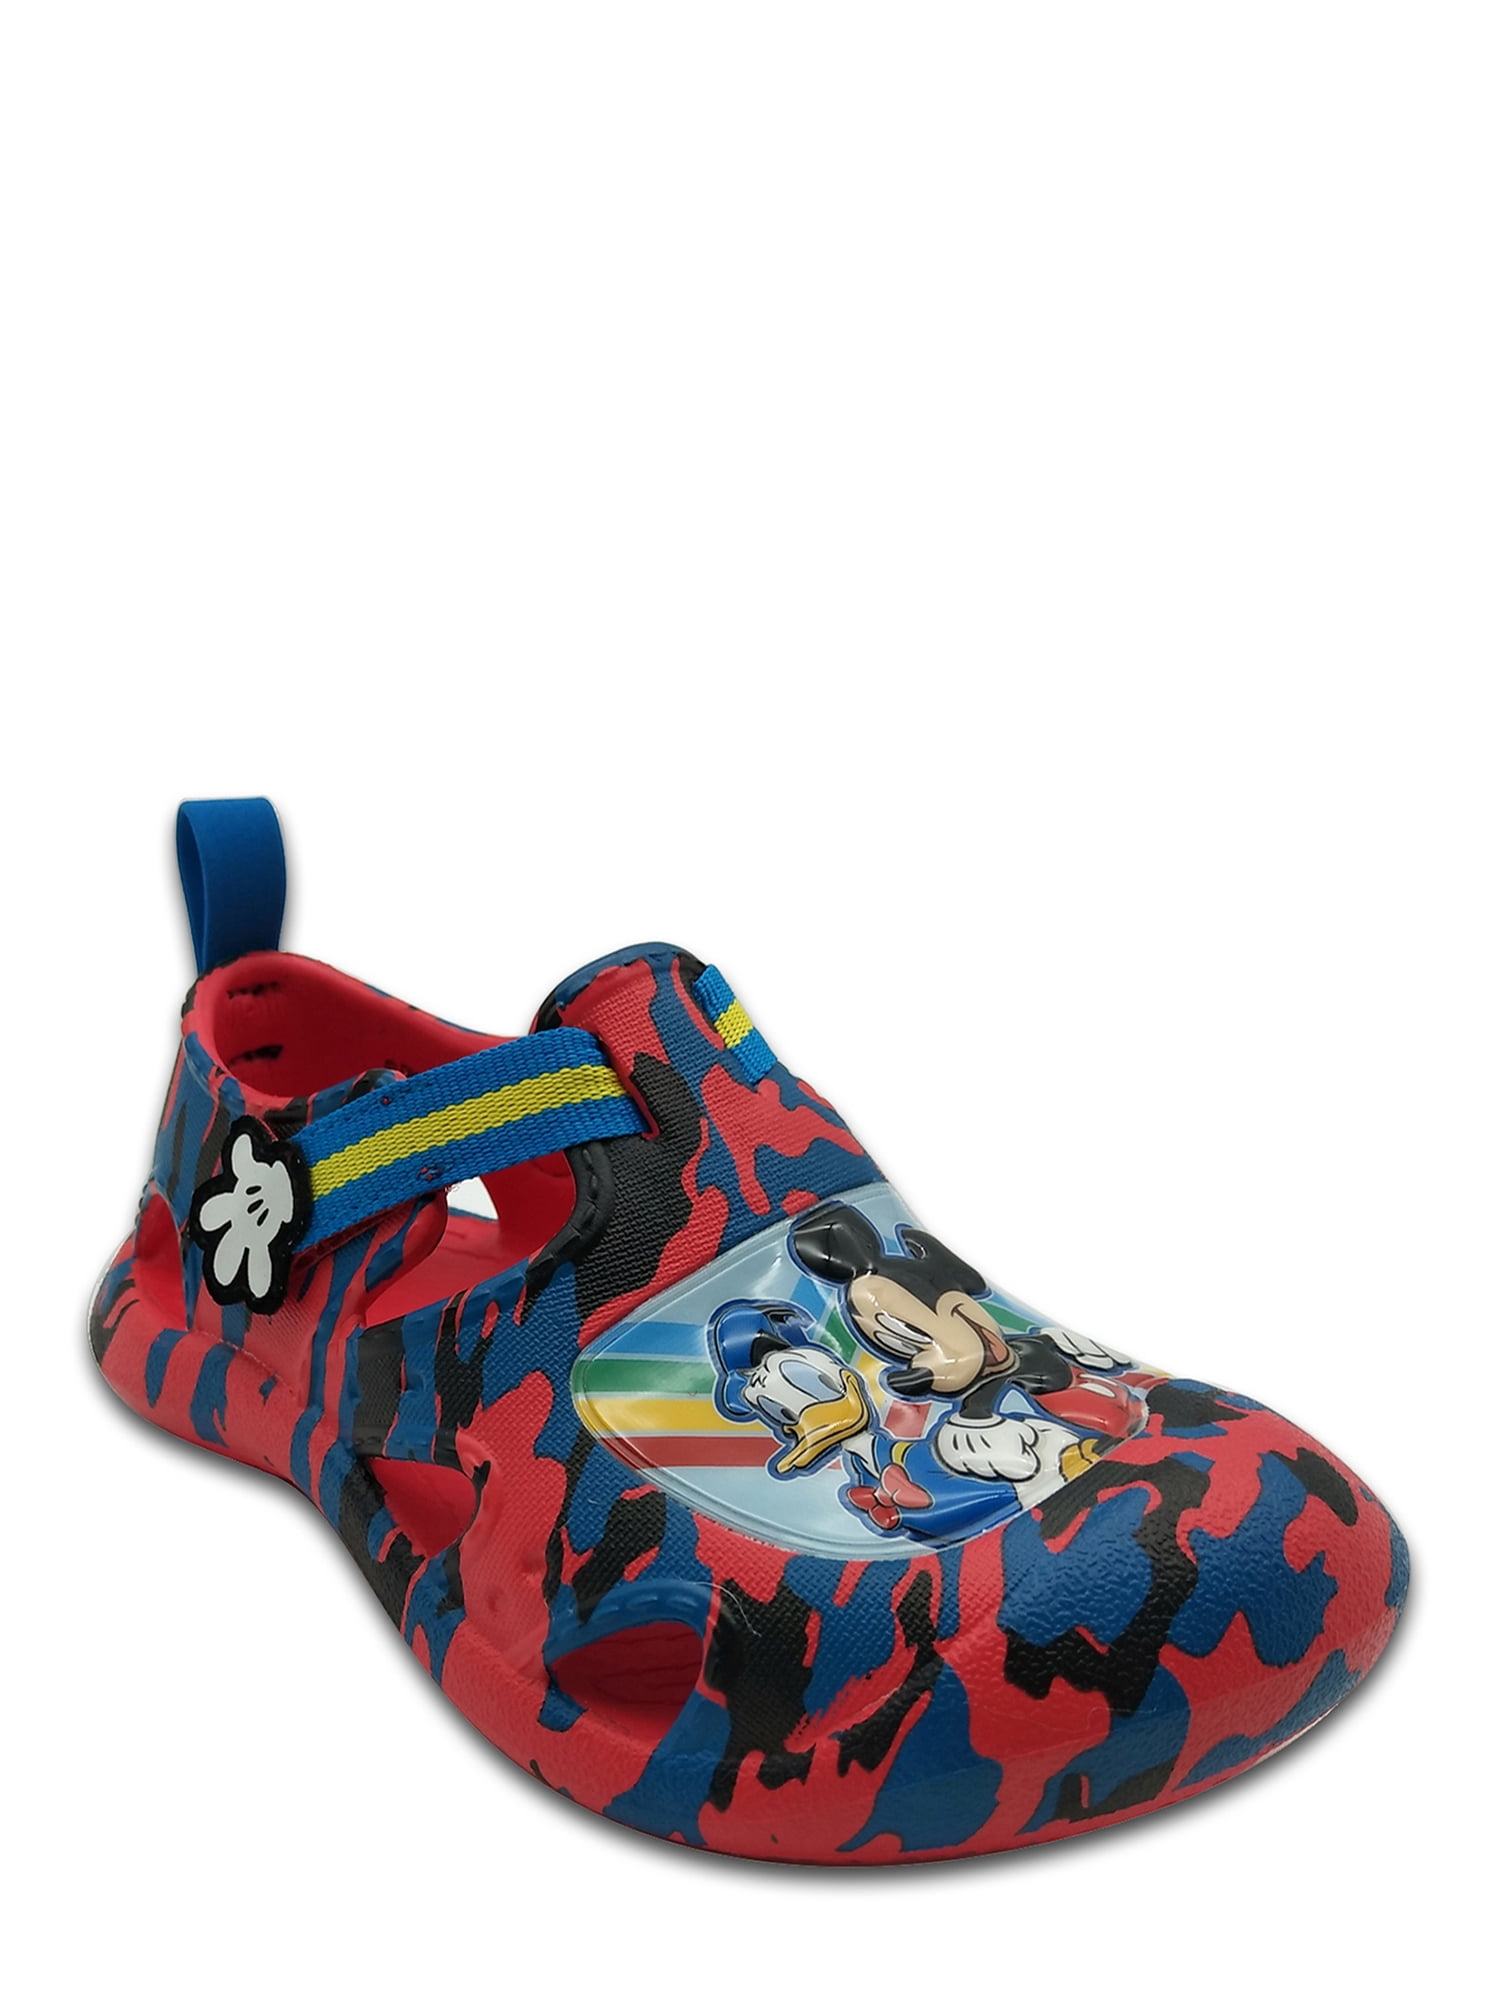 Marvel Boys Spiderman Clog Flip Flop Sandals Cloggs Toddler Children Size 6-12 